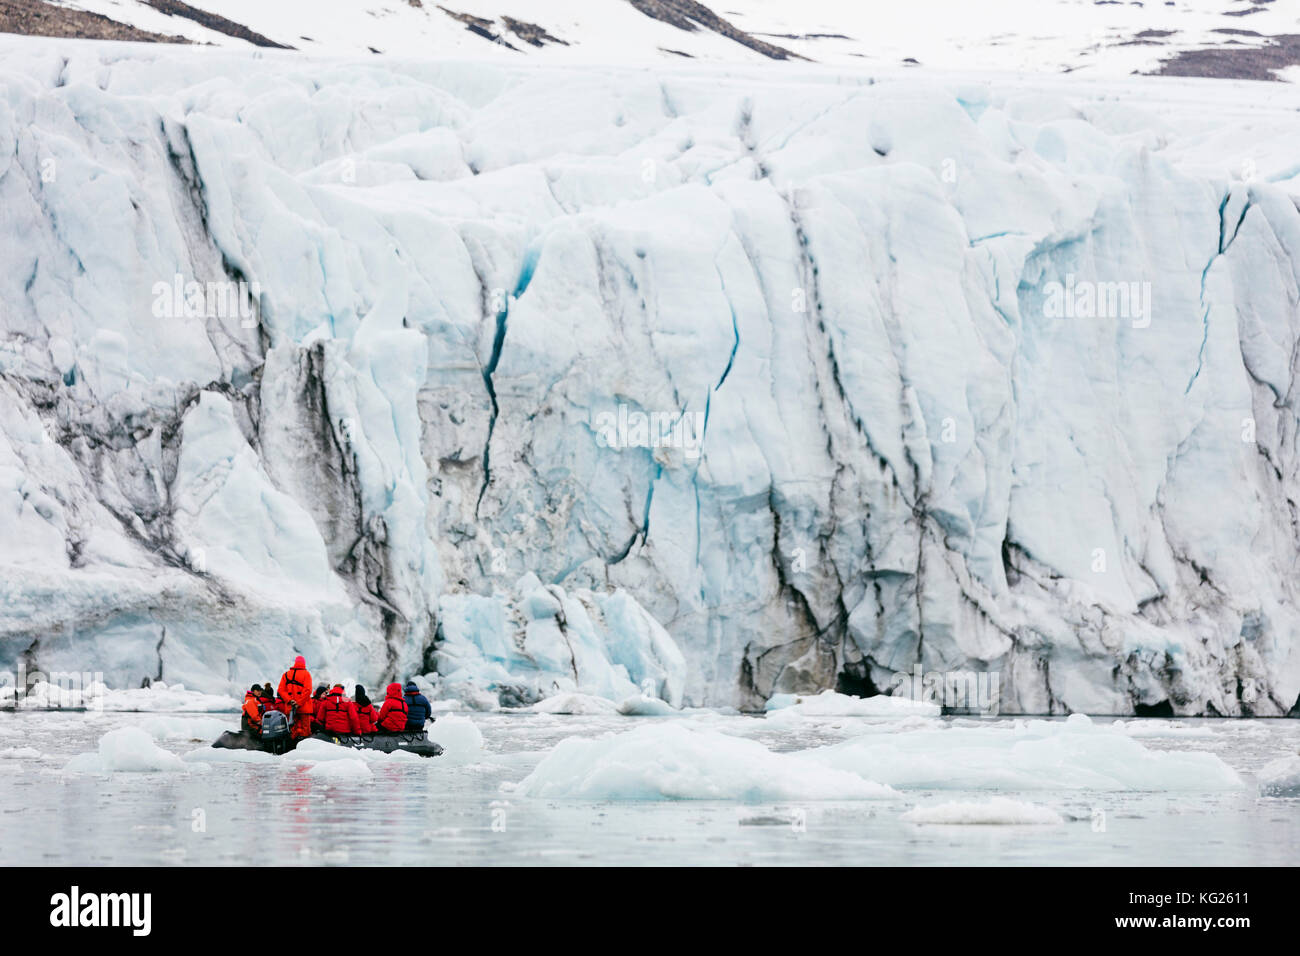 Zodiac trip for tourists, Hornbreen Glacier, Spitsbergen, Svalbard, Arctic, Norway, Europe Stock Photo